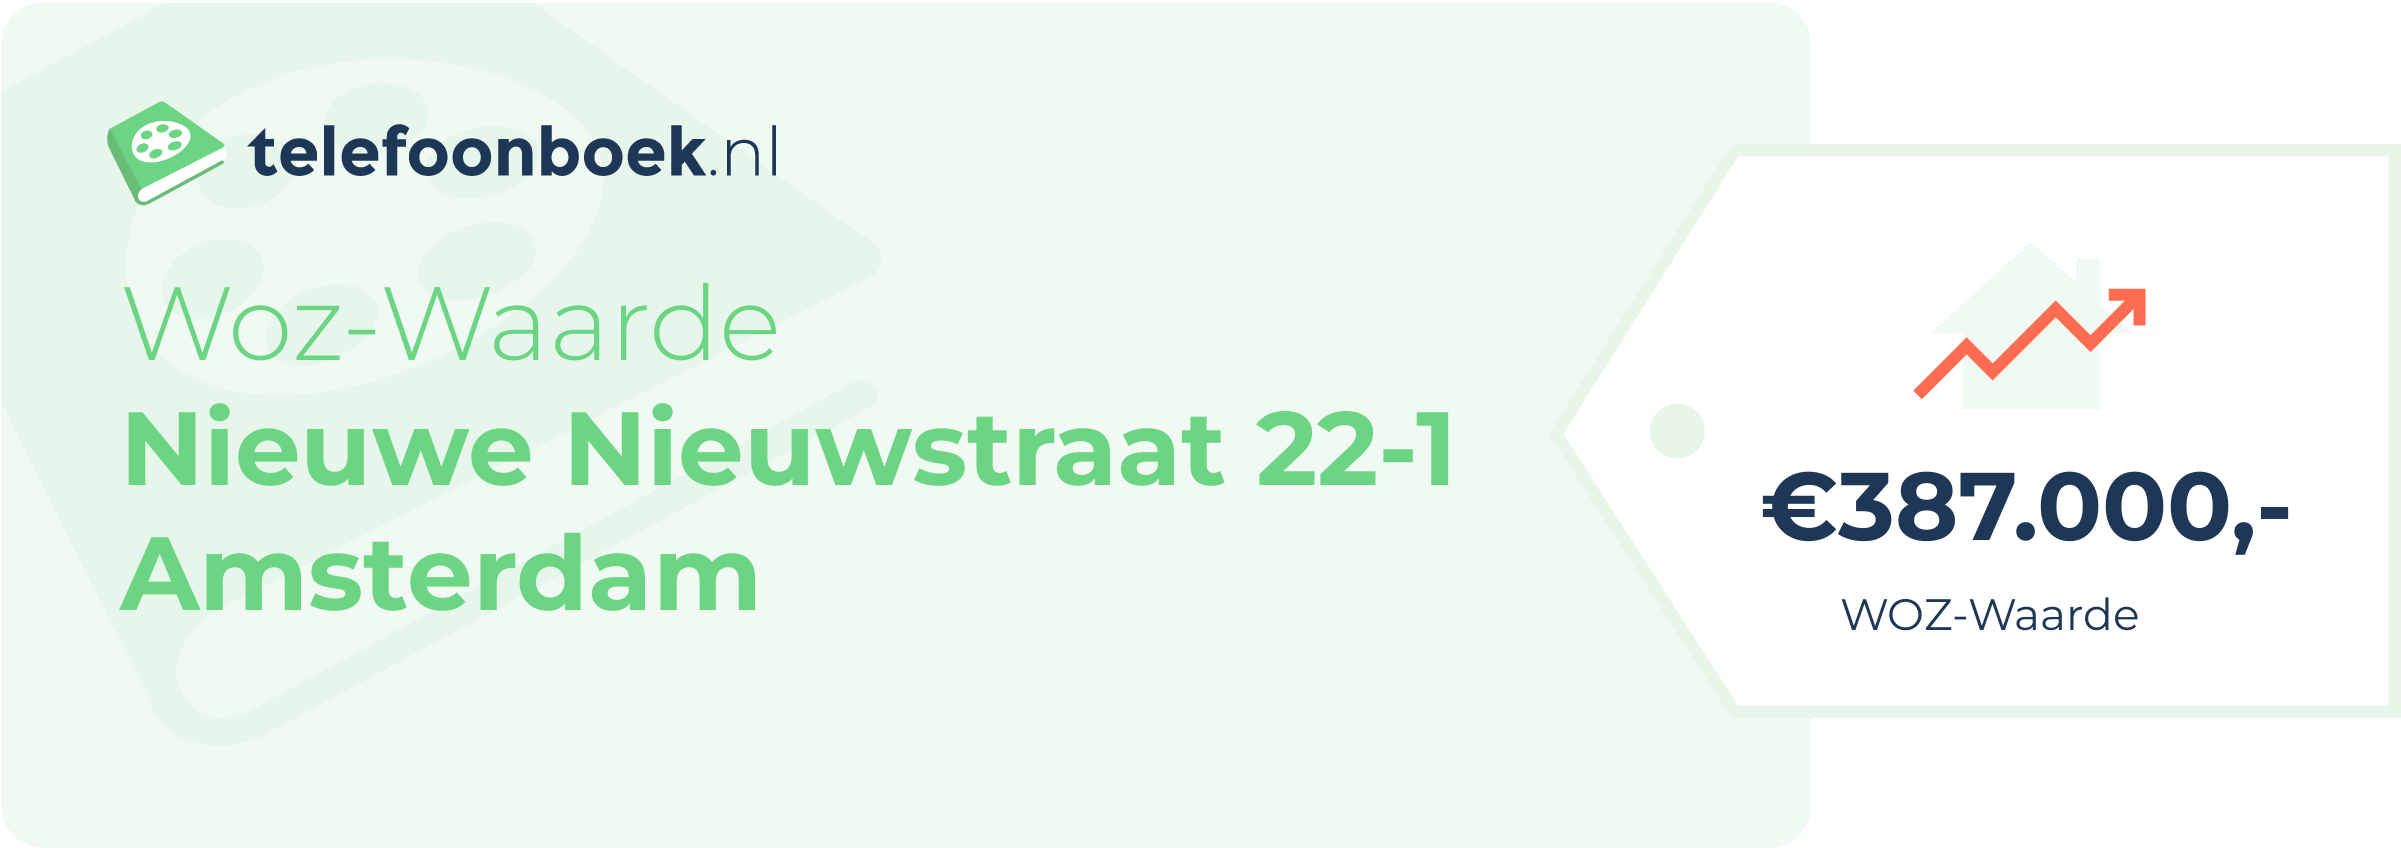 WOZ-waarde Nieuwe Nieuwstraat 22-1 Amsterdam